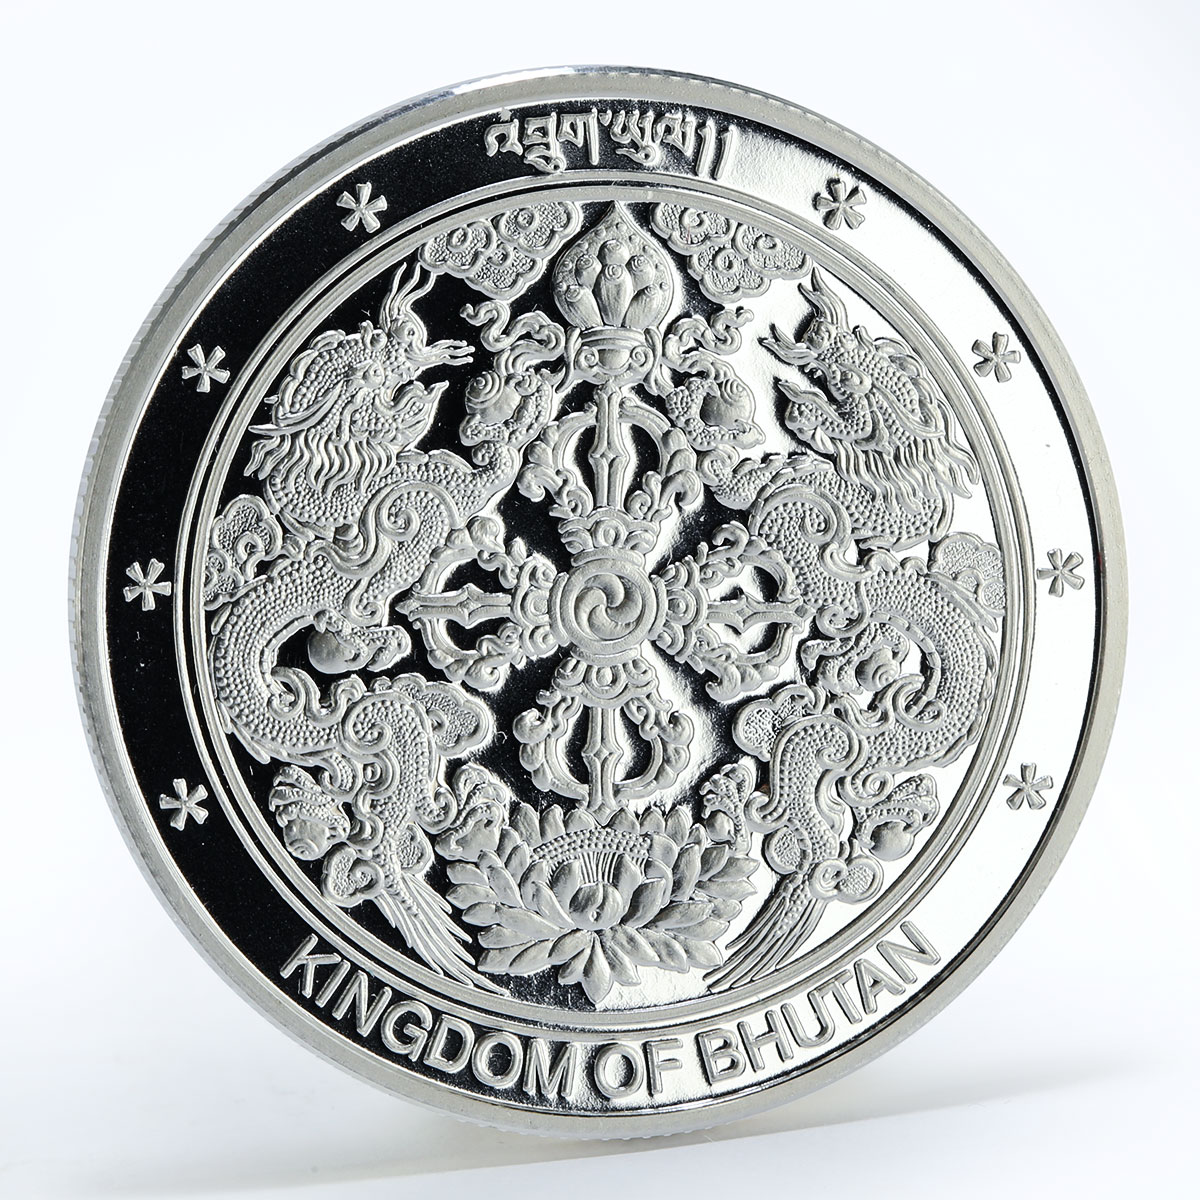 Bhutan 250 ngultrum Games Pencak Silat proof silver coin 2004